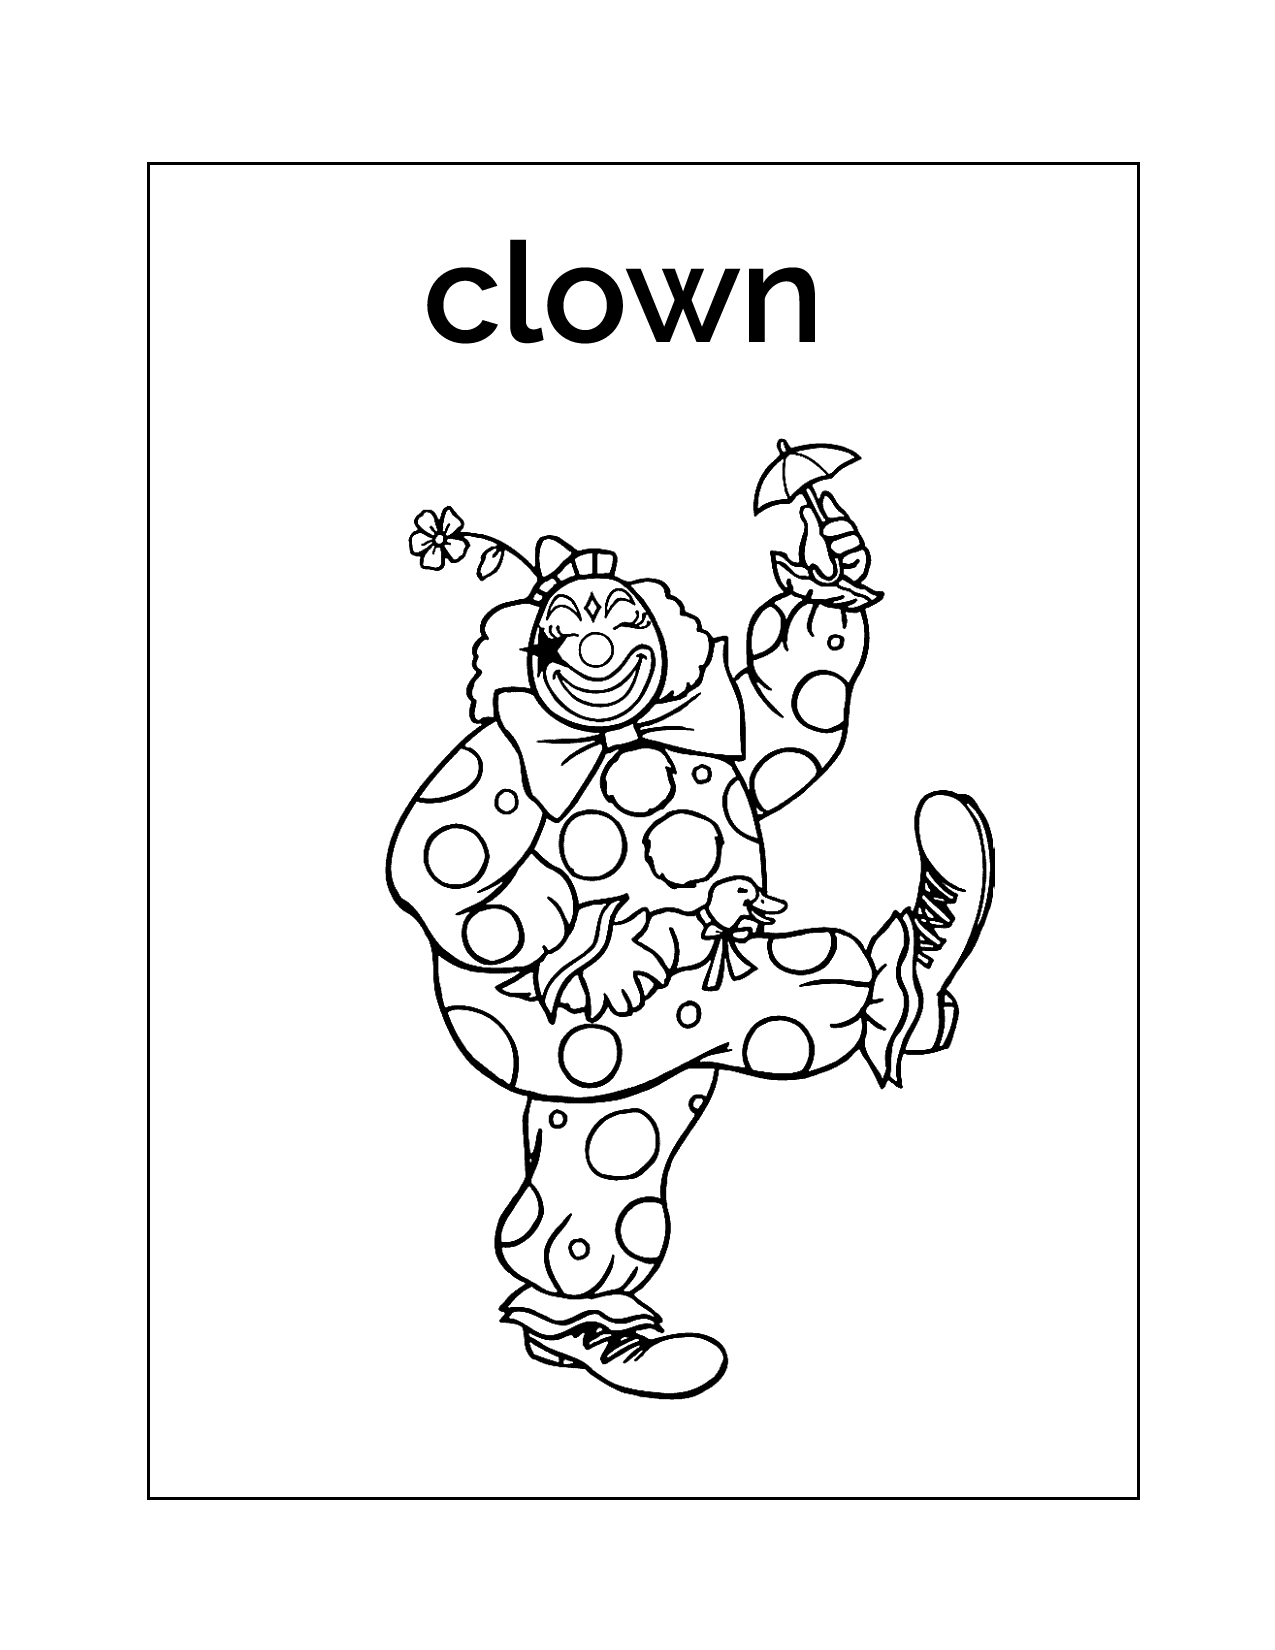 Clown Coloring Sheet